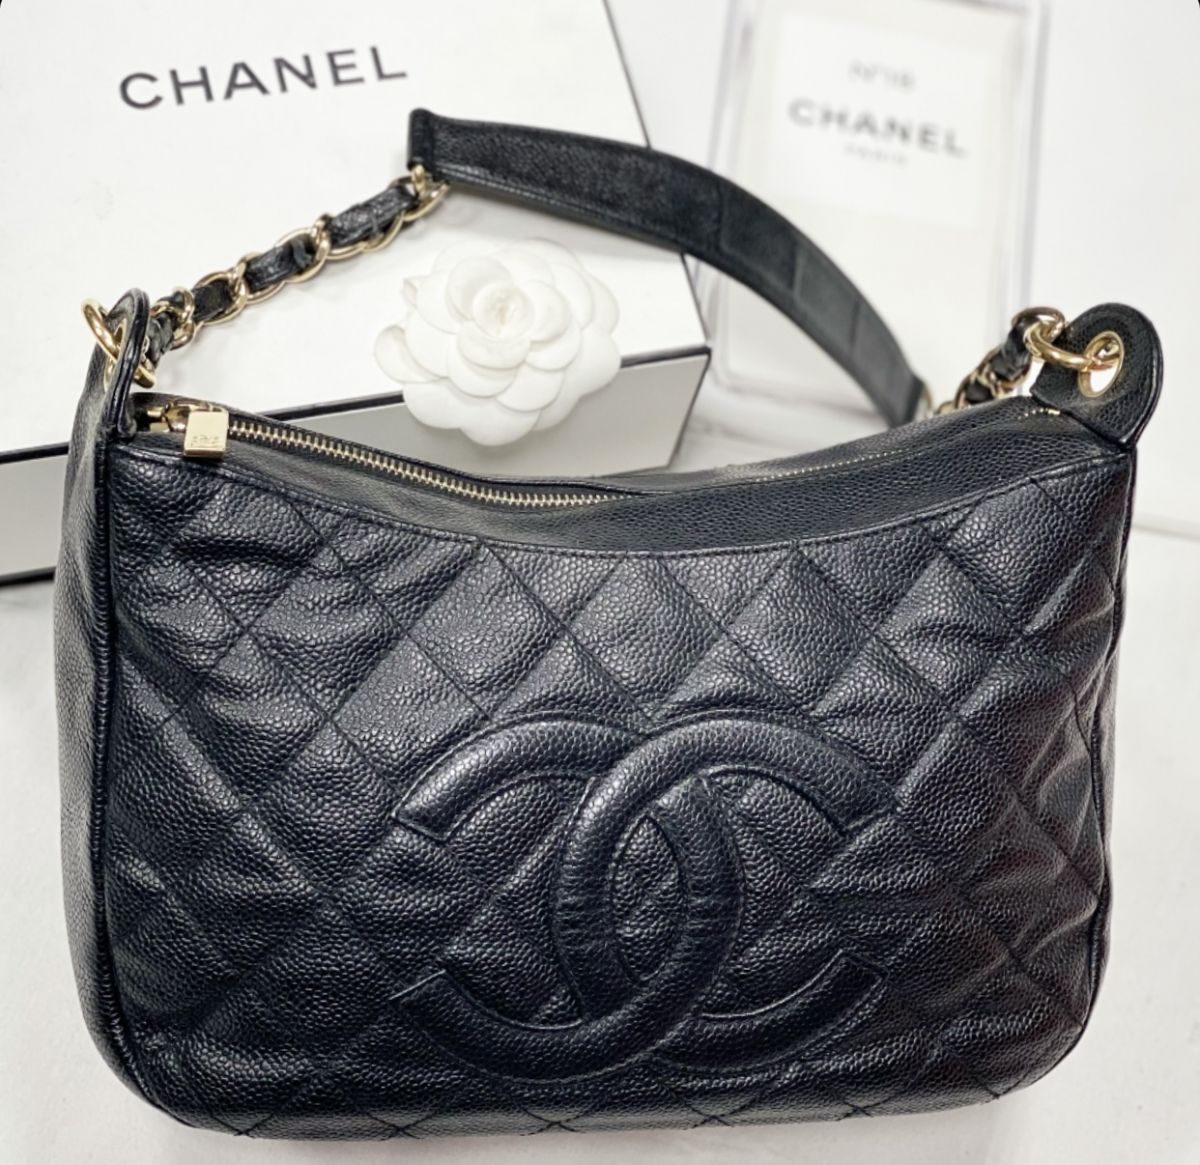 Сумка Chanel размер 25/17 цена 76 925 руб 